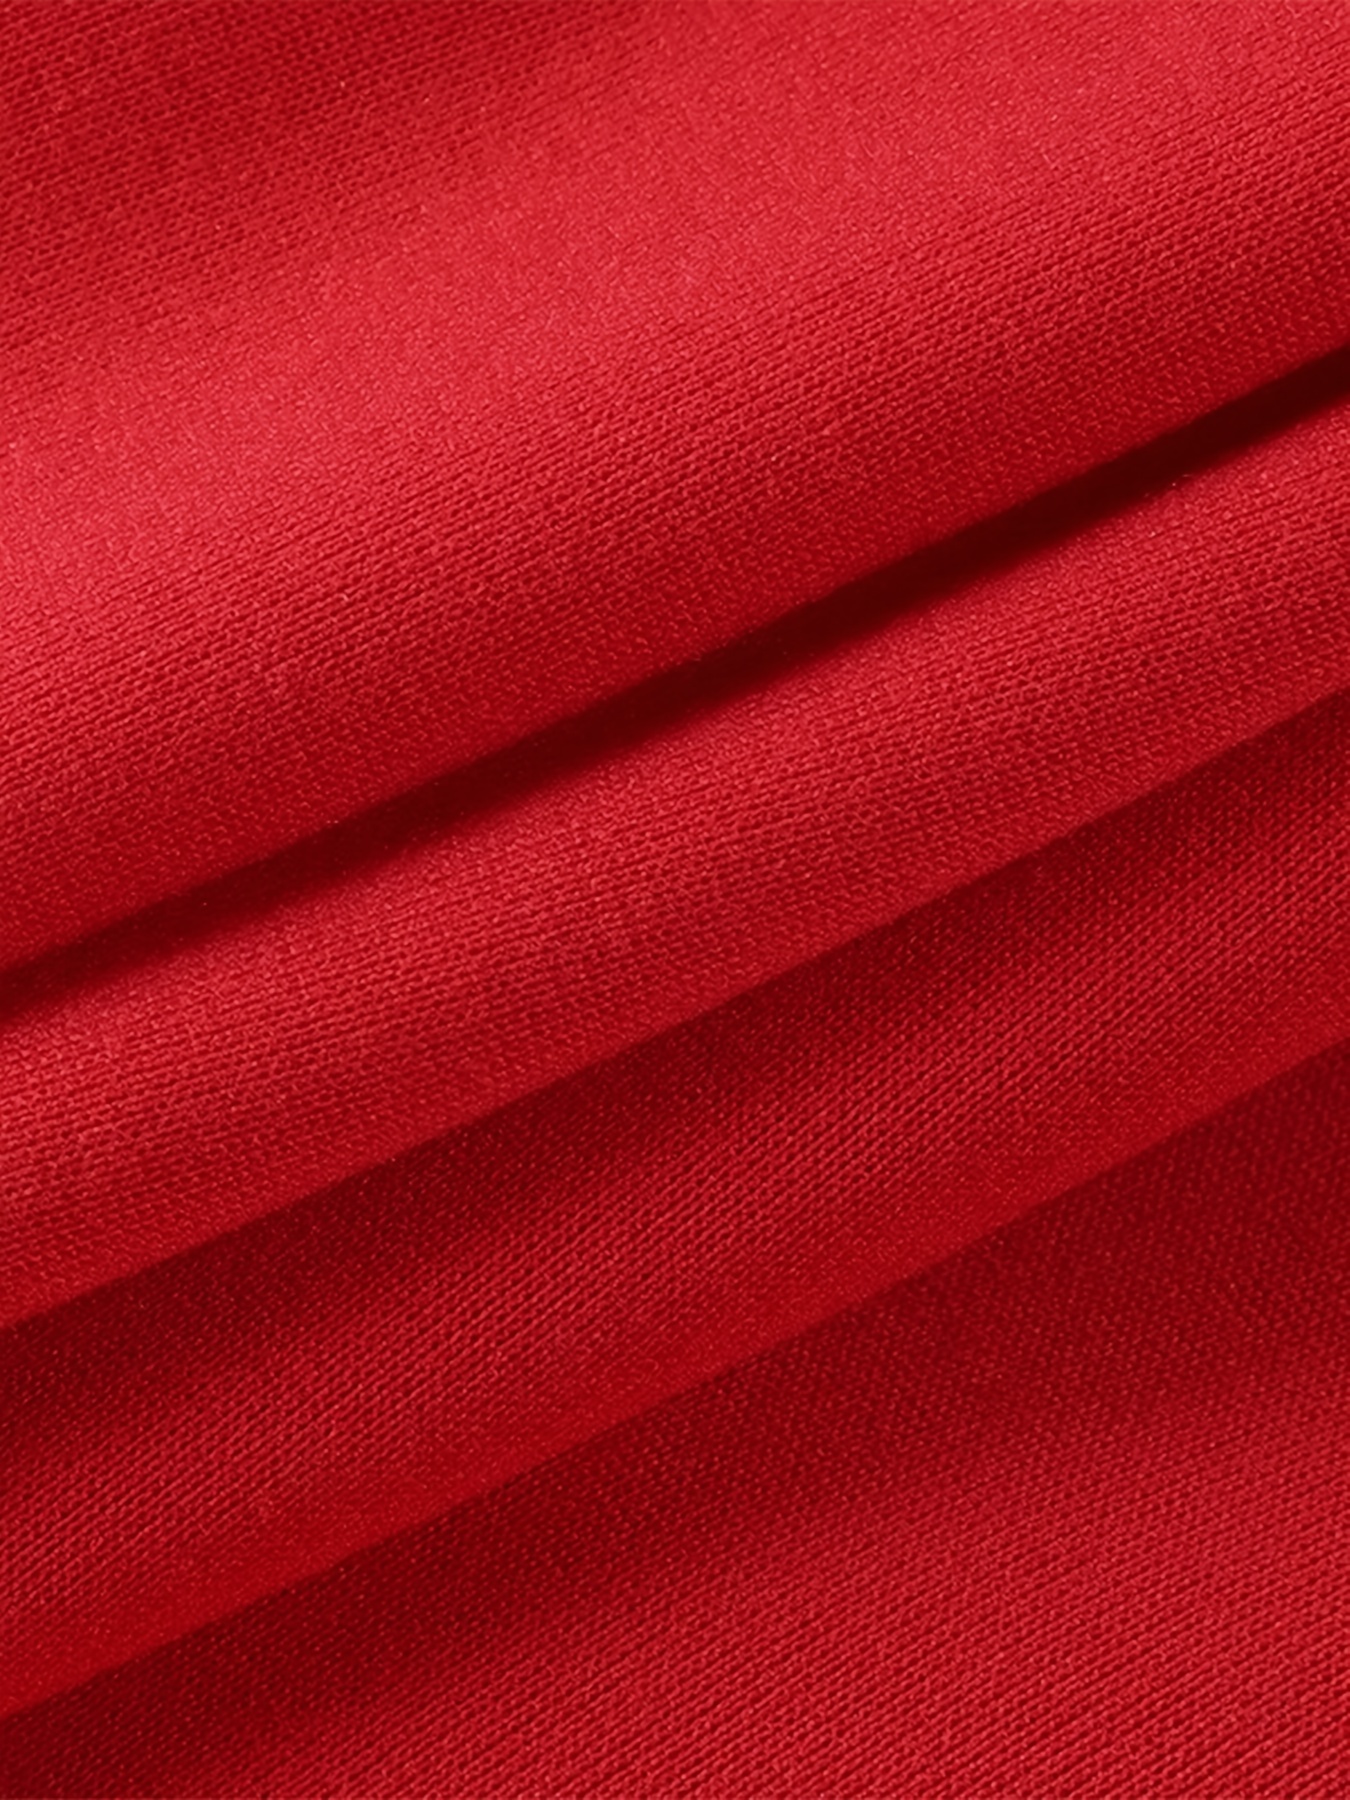 Red Cotton Twill Baseball Jacket